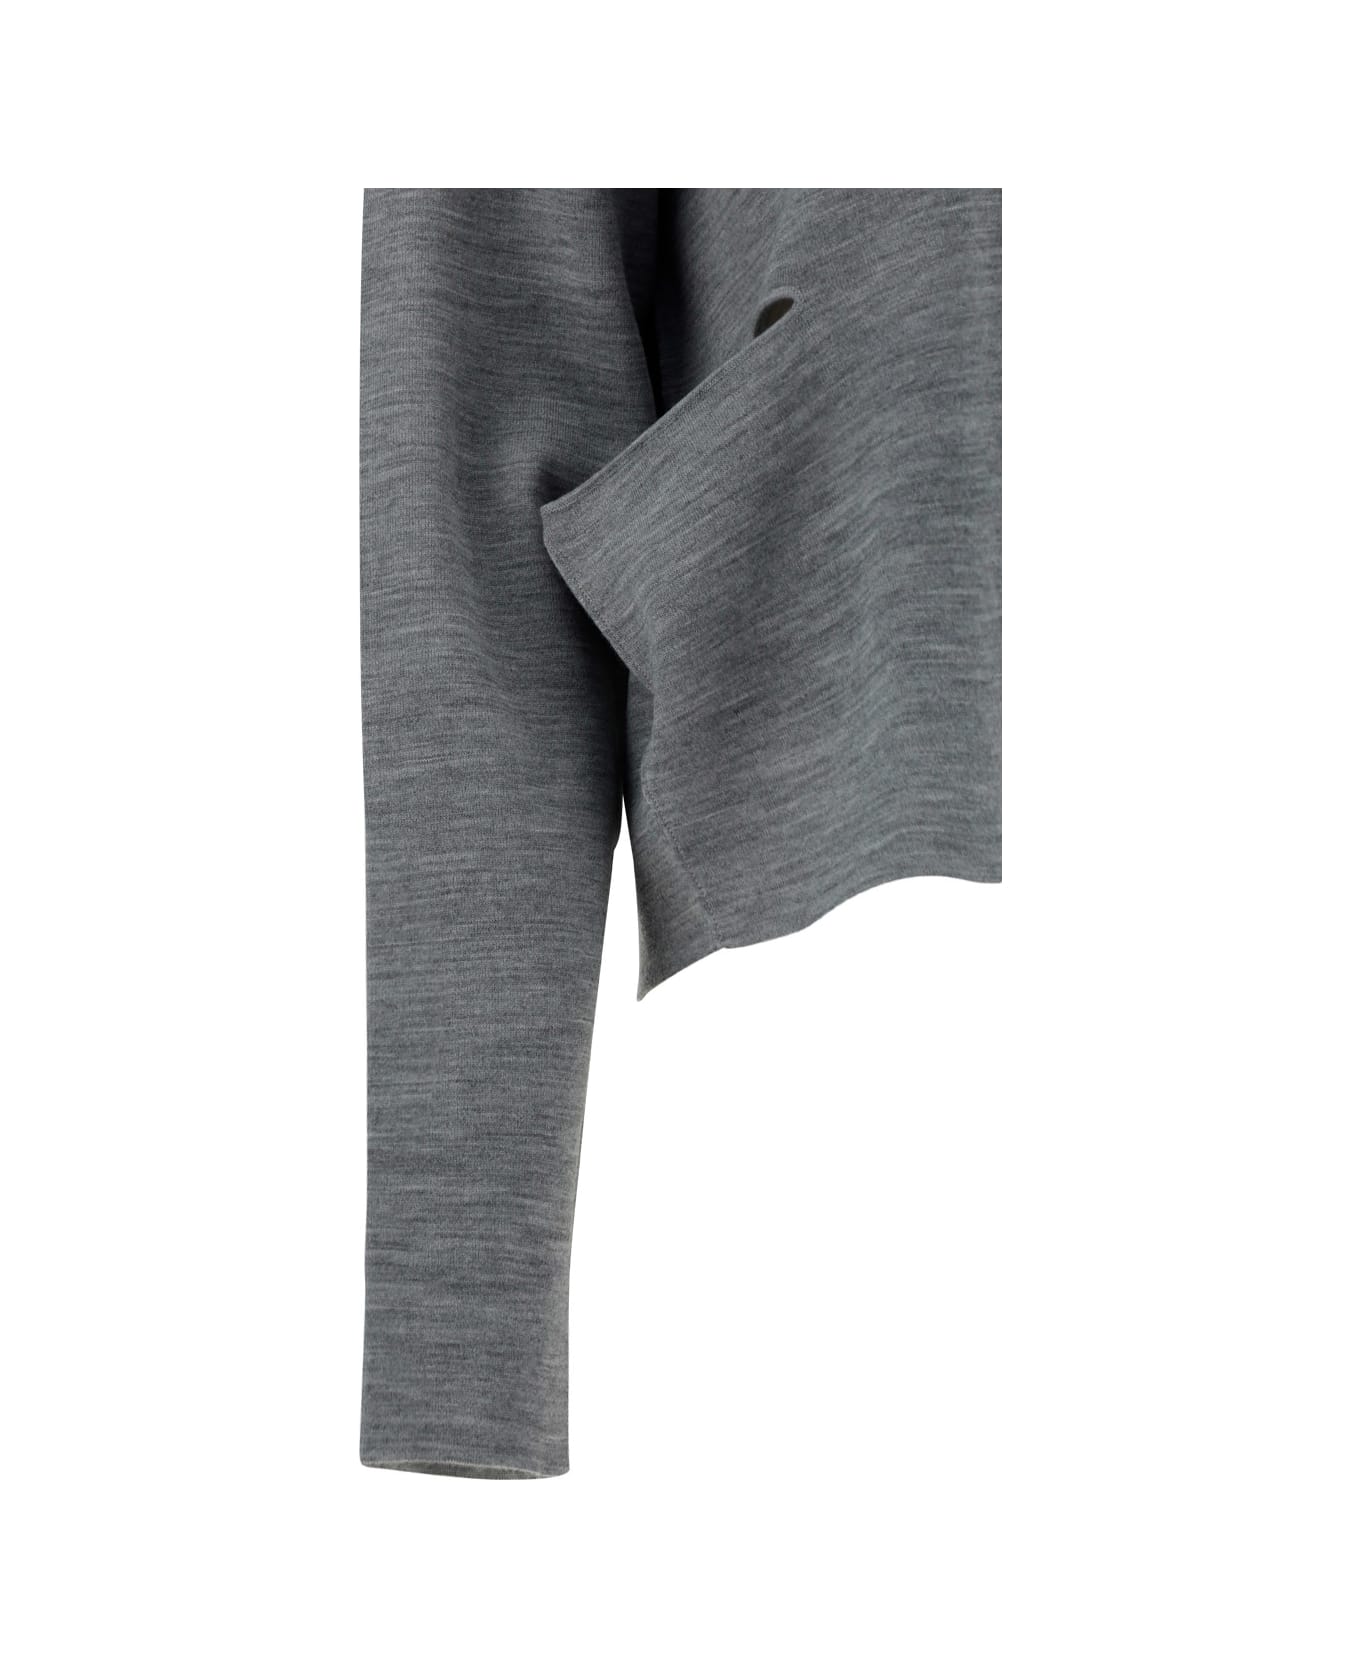 Side Sweatshirt - Grey Melange